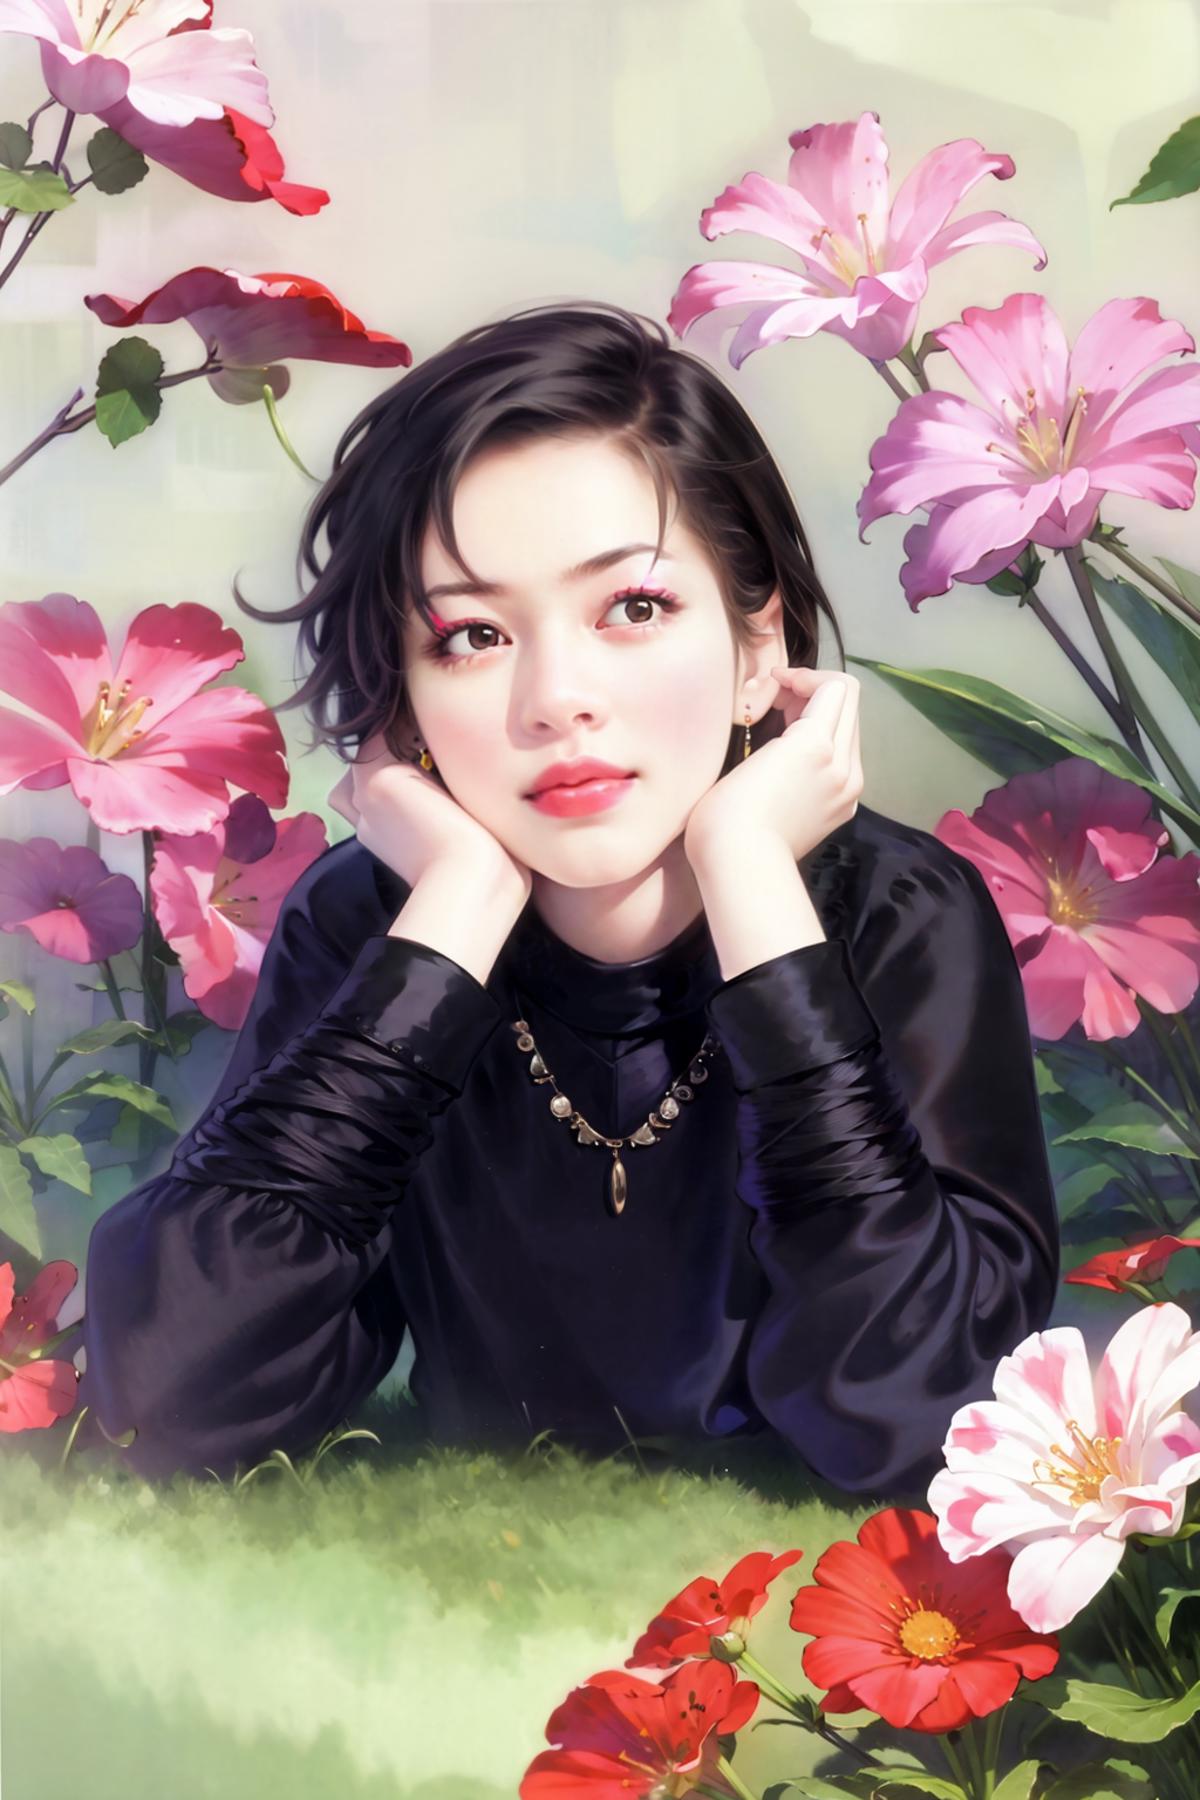 言情小说风 romance novel cover style image by kozue